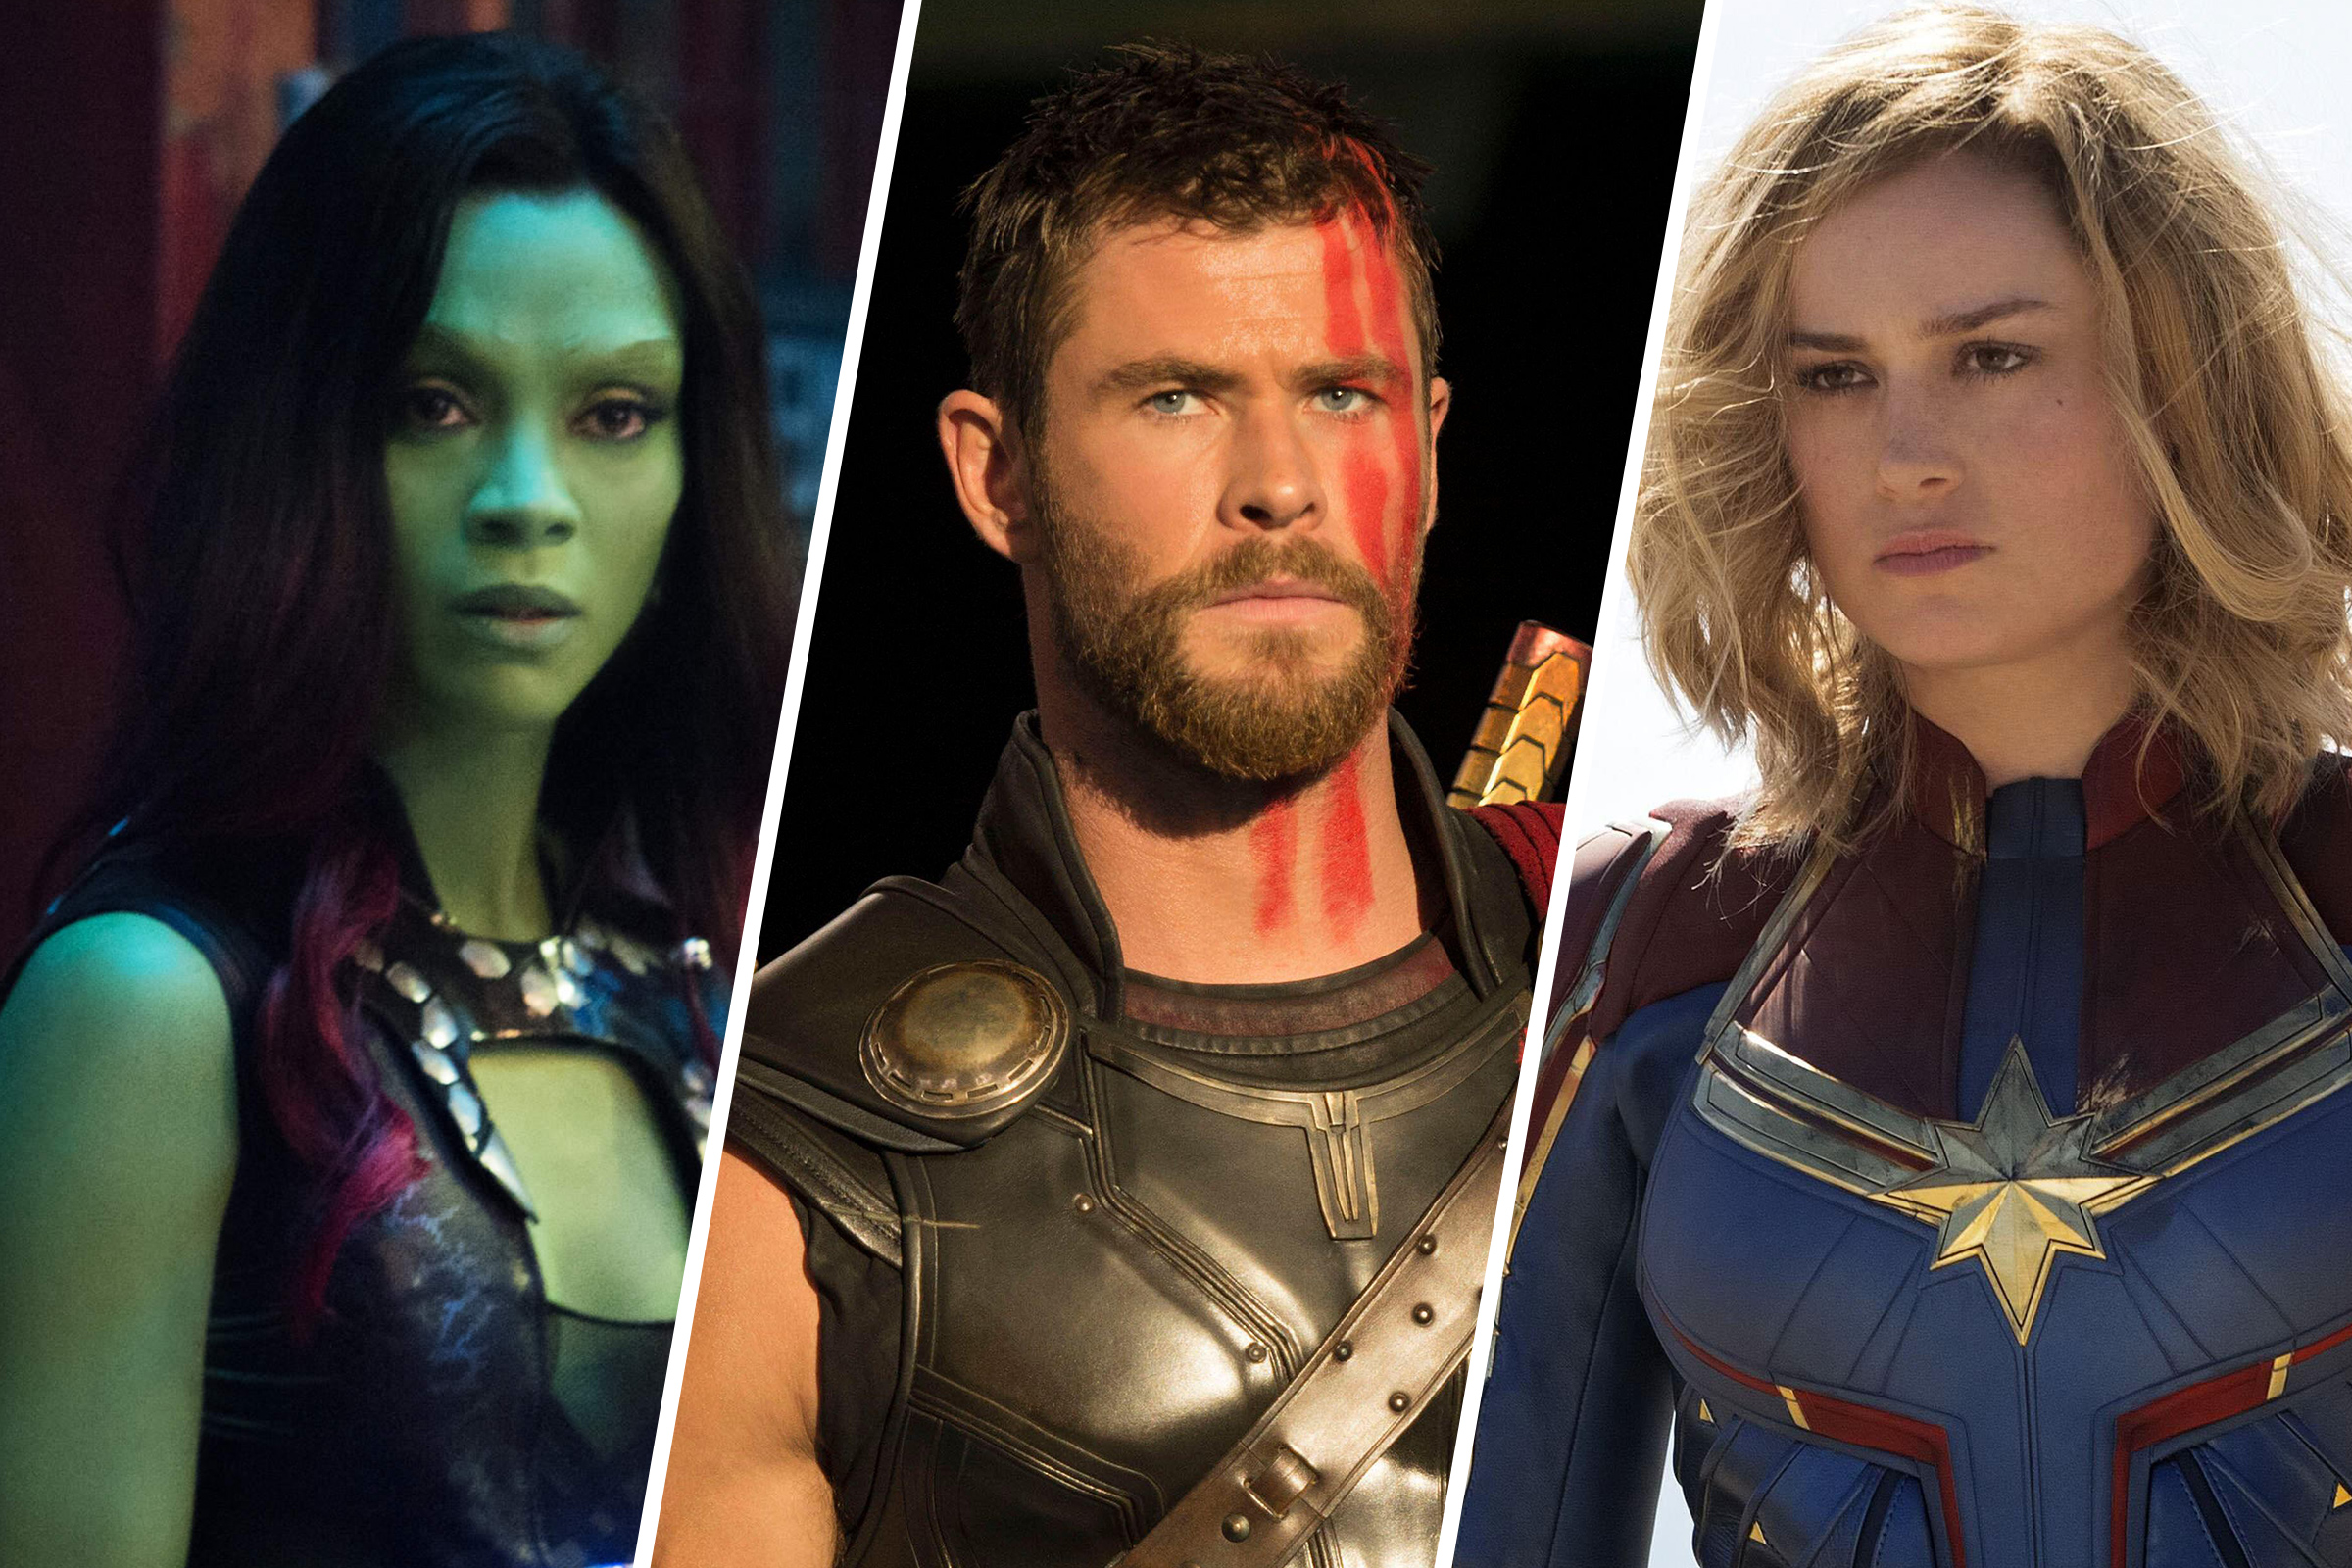 Zoe Saldana as Gamora, Chris Hemsworth as Thor, and Brie Larson as Carol Danvers star in Phase 4 of the Marvel Cinematic Universe. (Alamy (3))